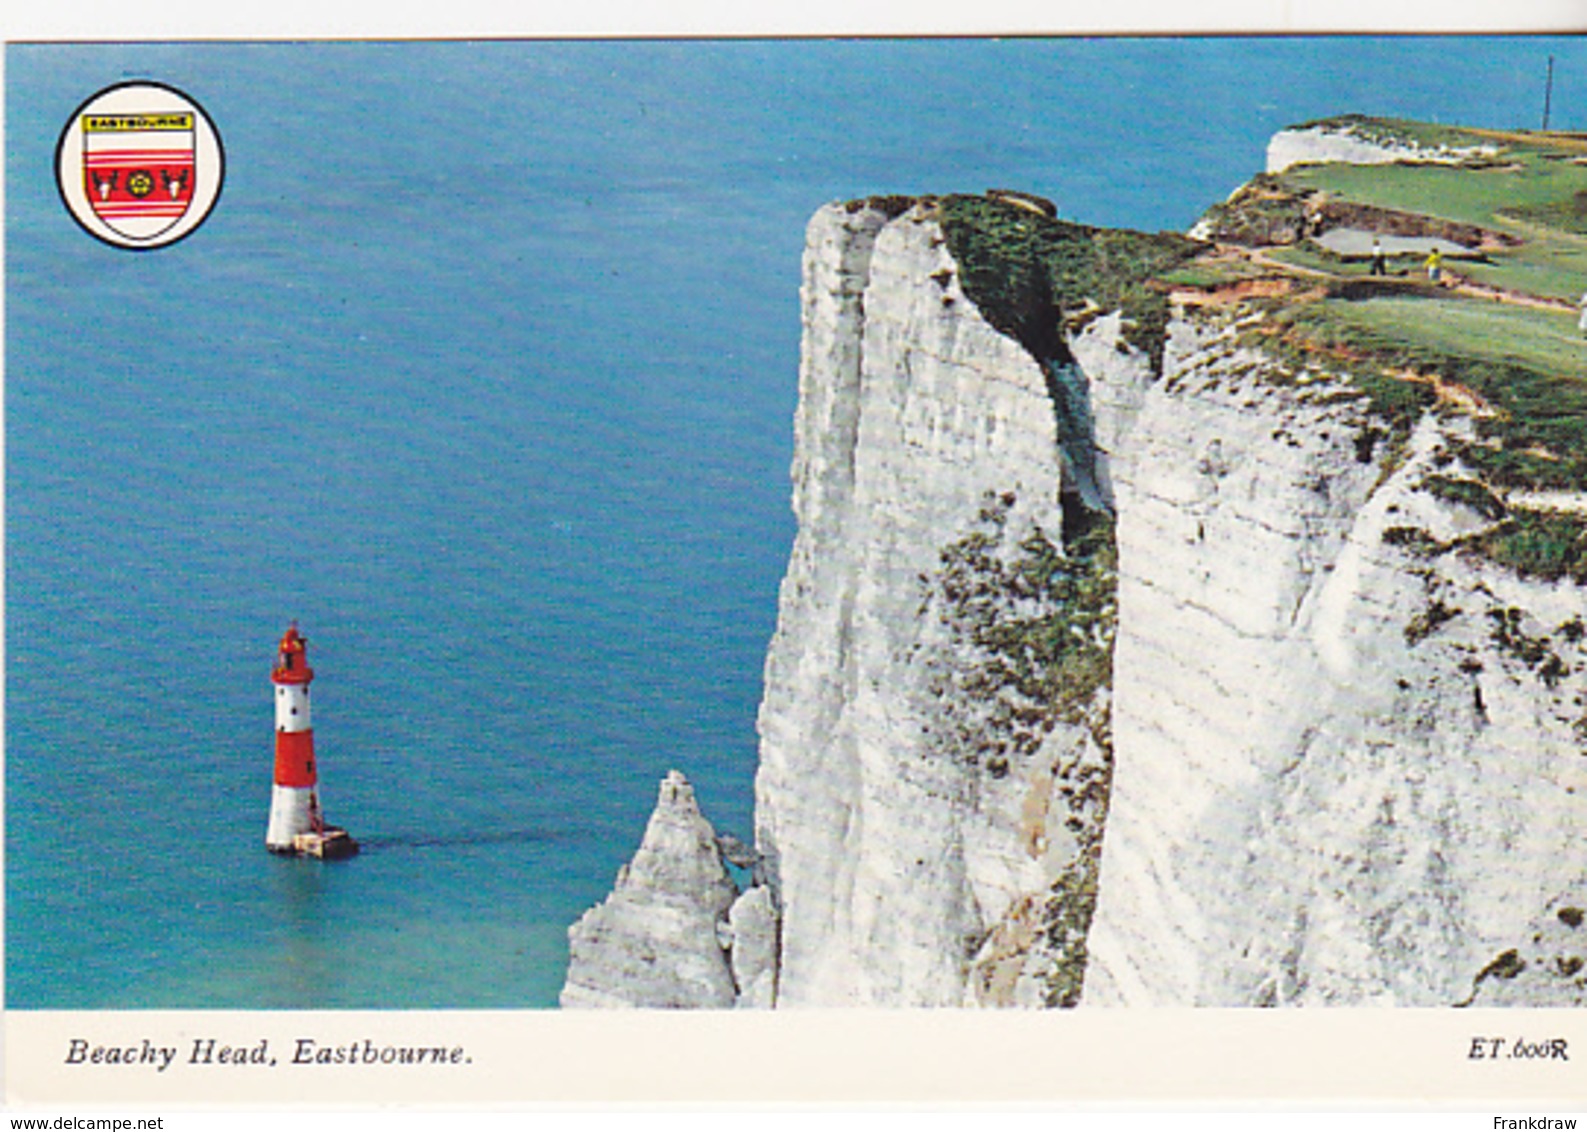 Postcard - Beachy Head, Eastbourne - Card No. ET.600R - VG - Unclassified